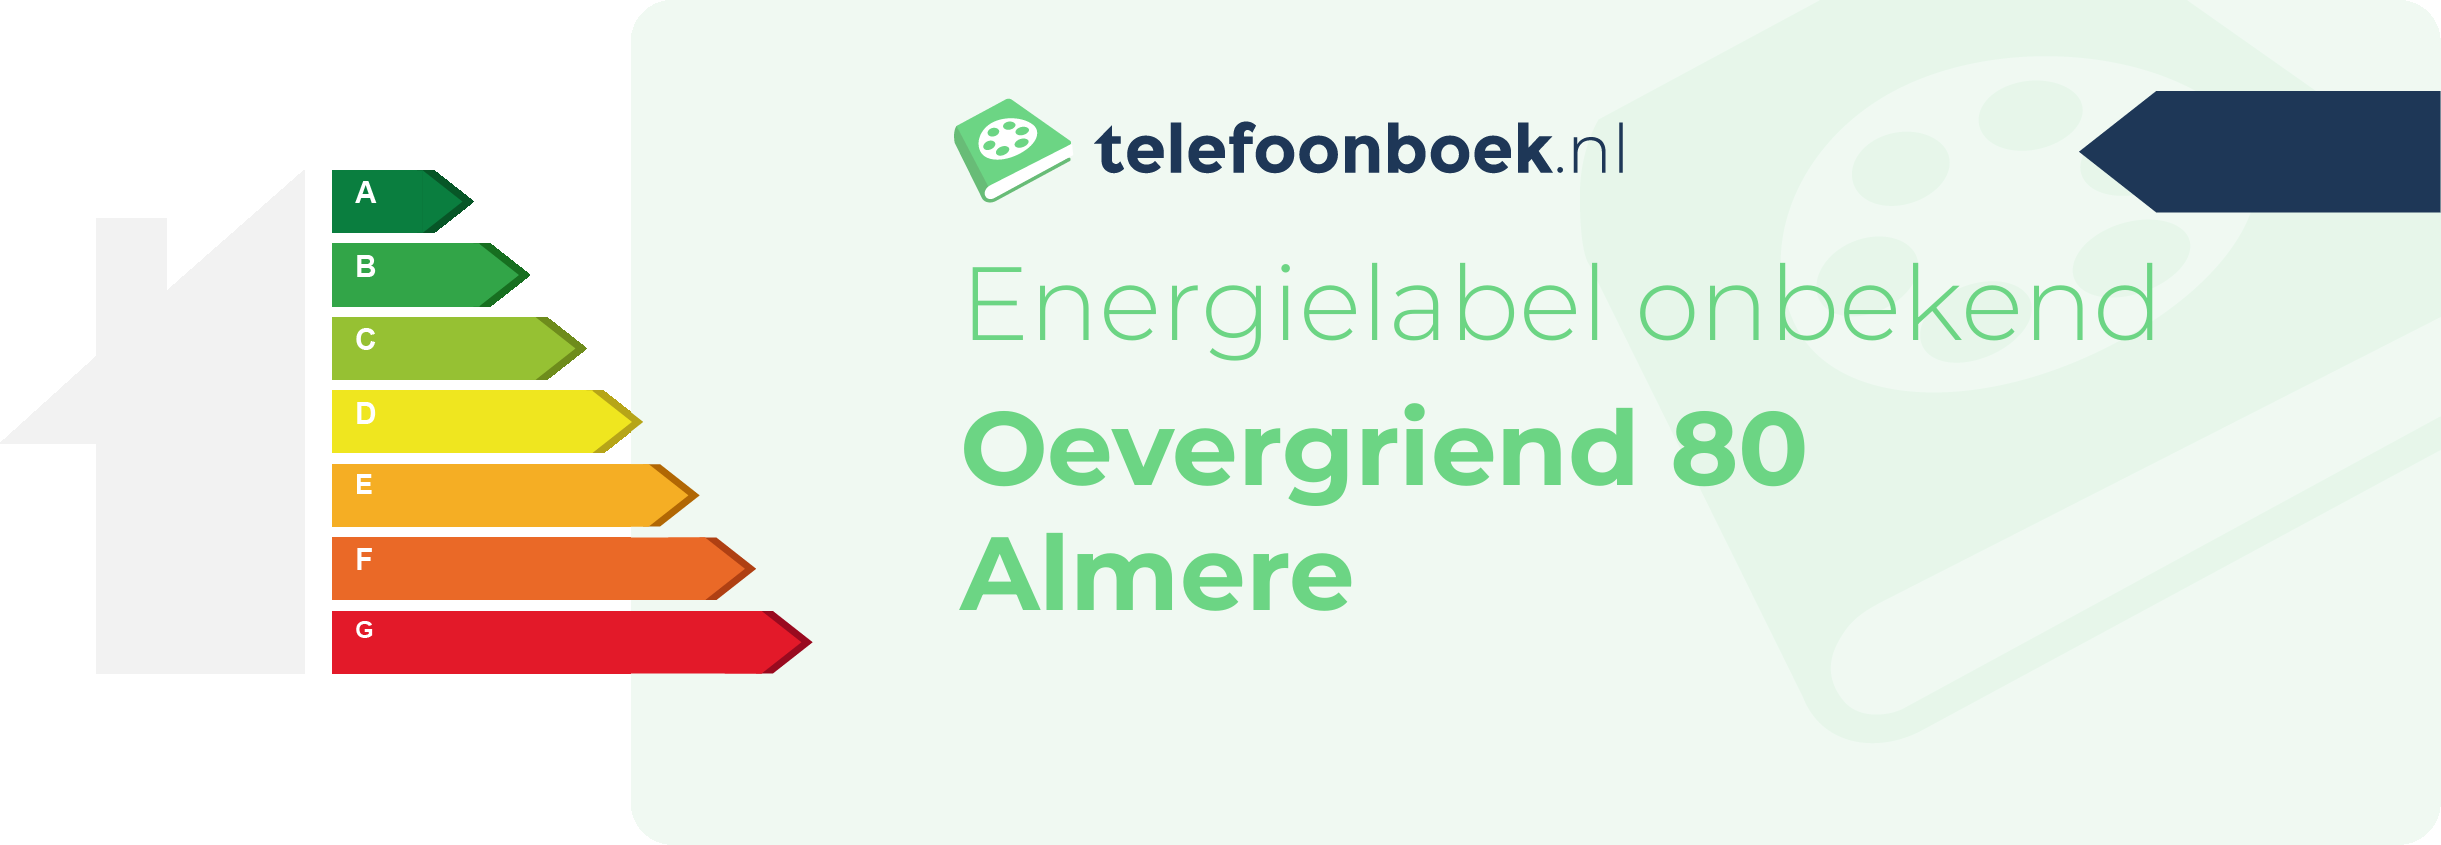 Energielabel Oevergriend 80 Almere